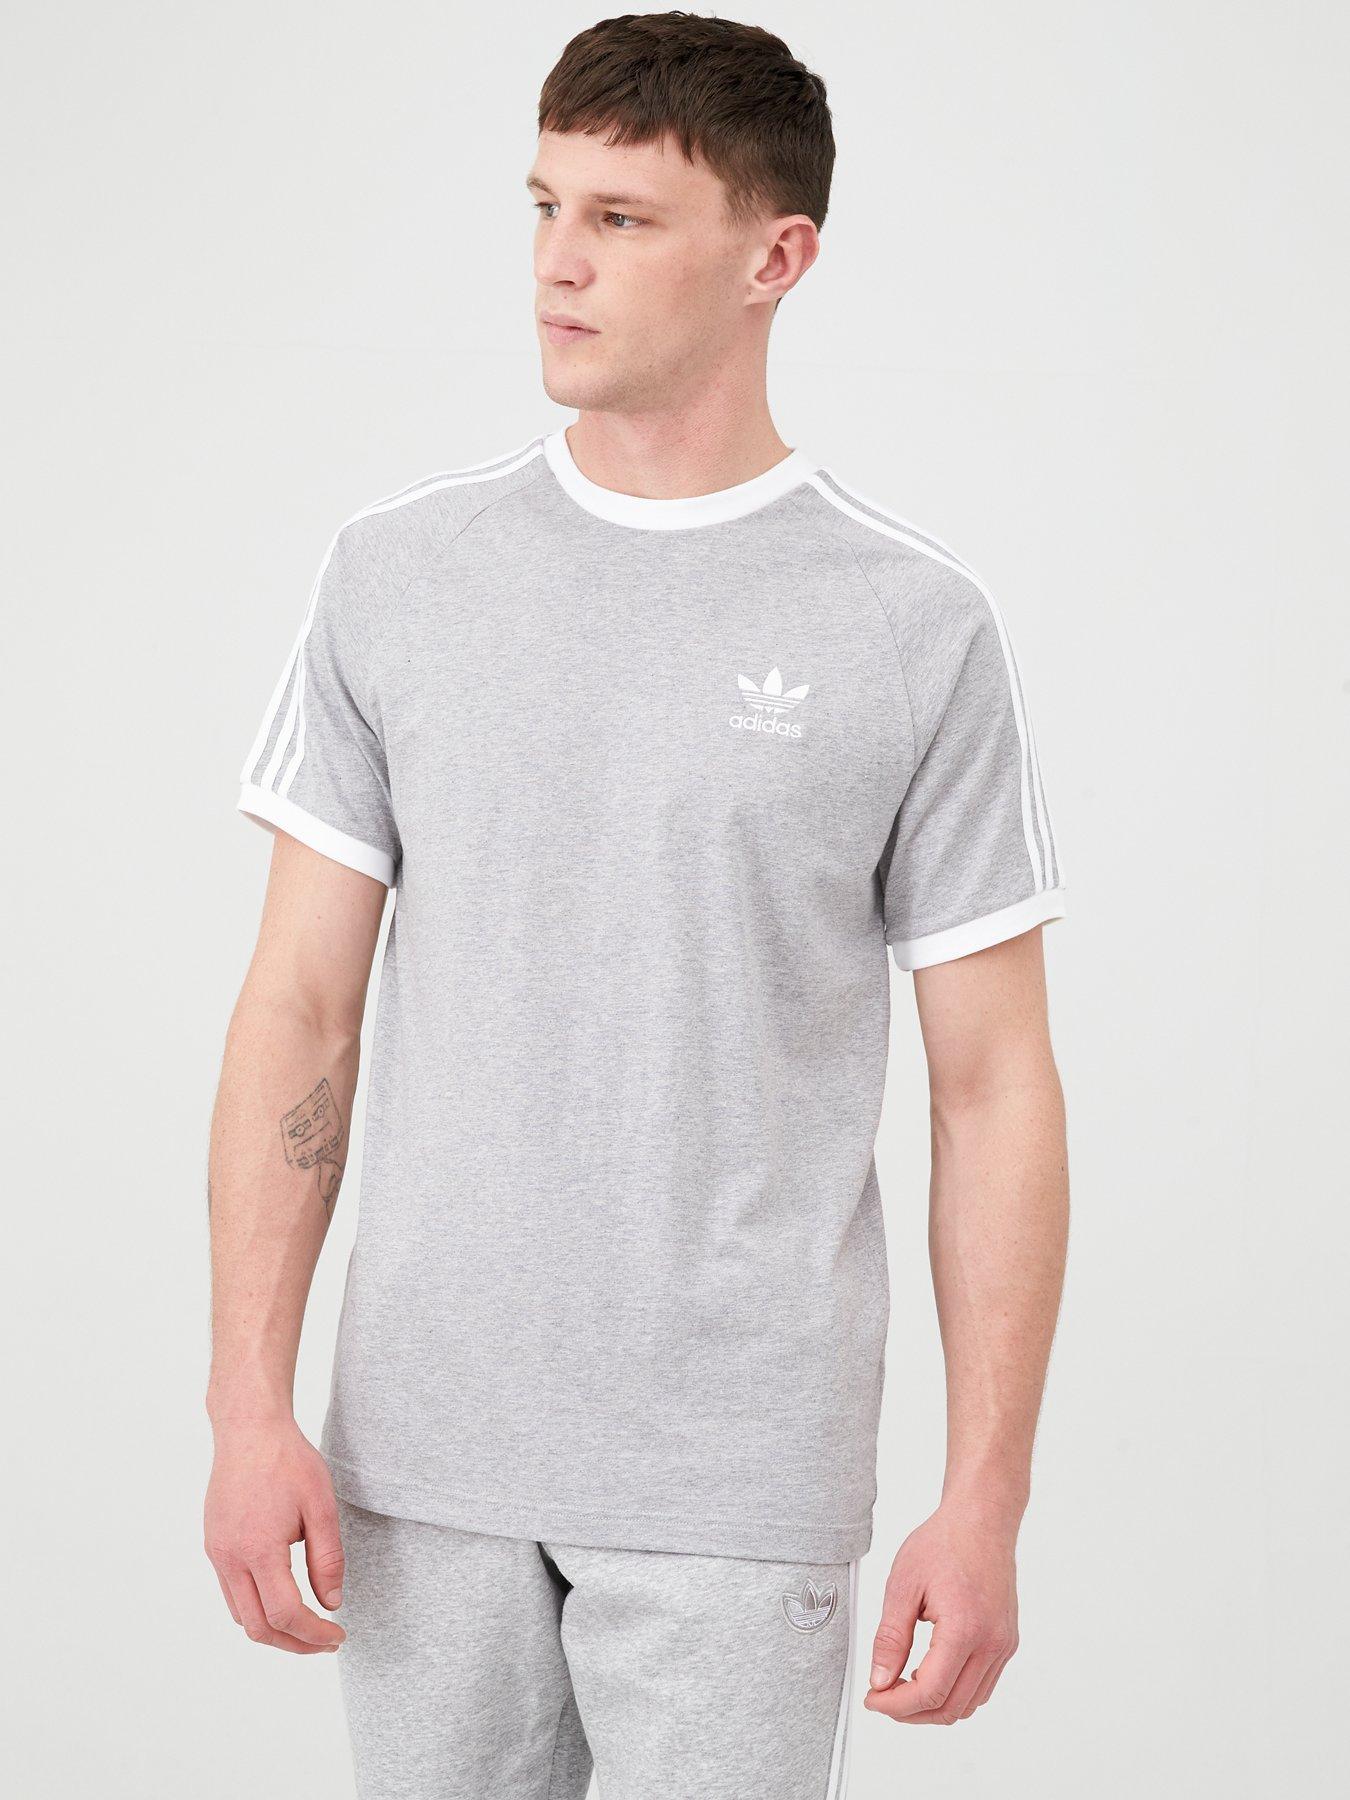 grey adidas t shirt